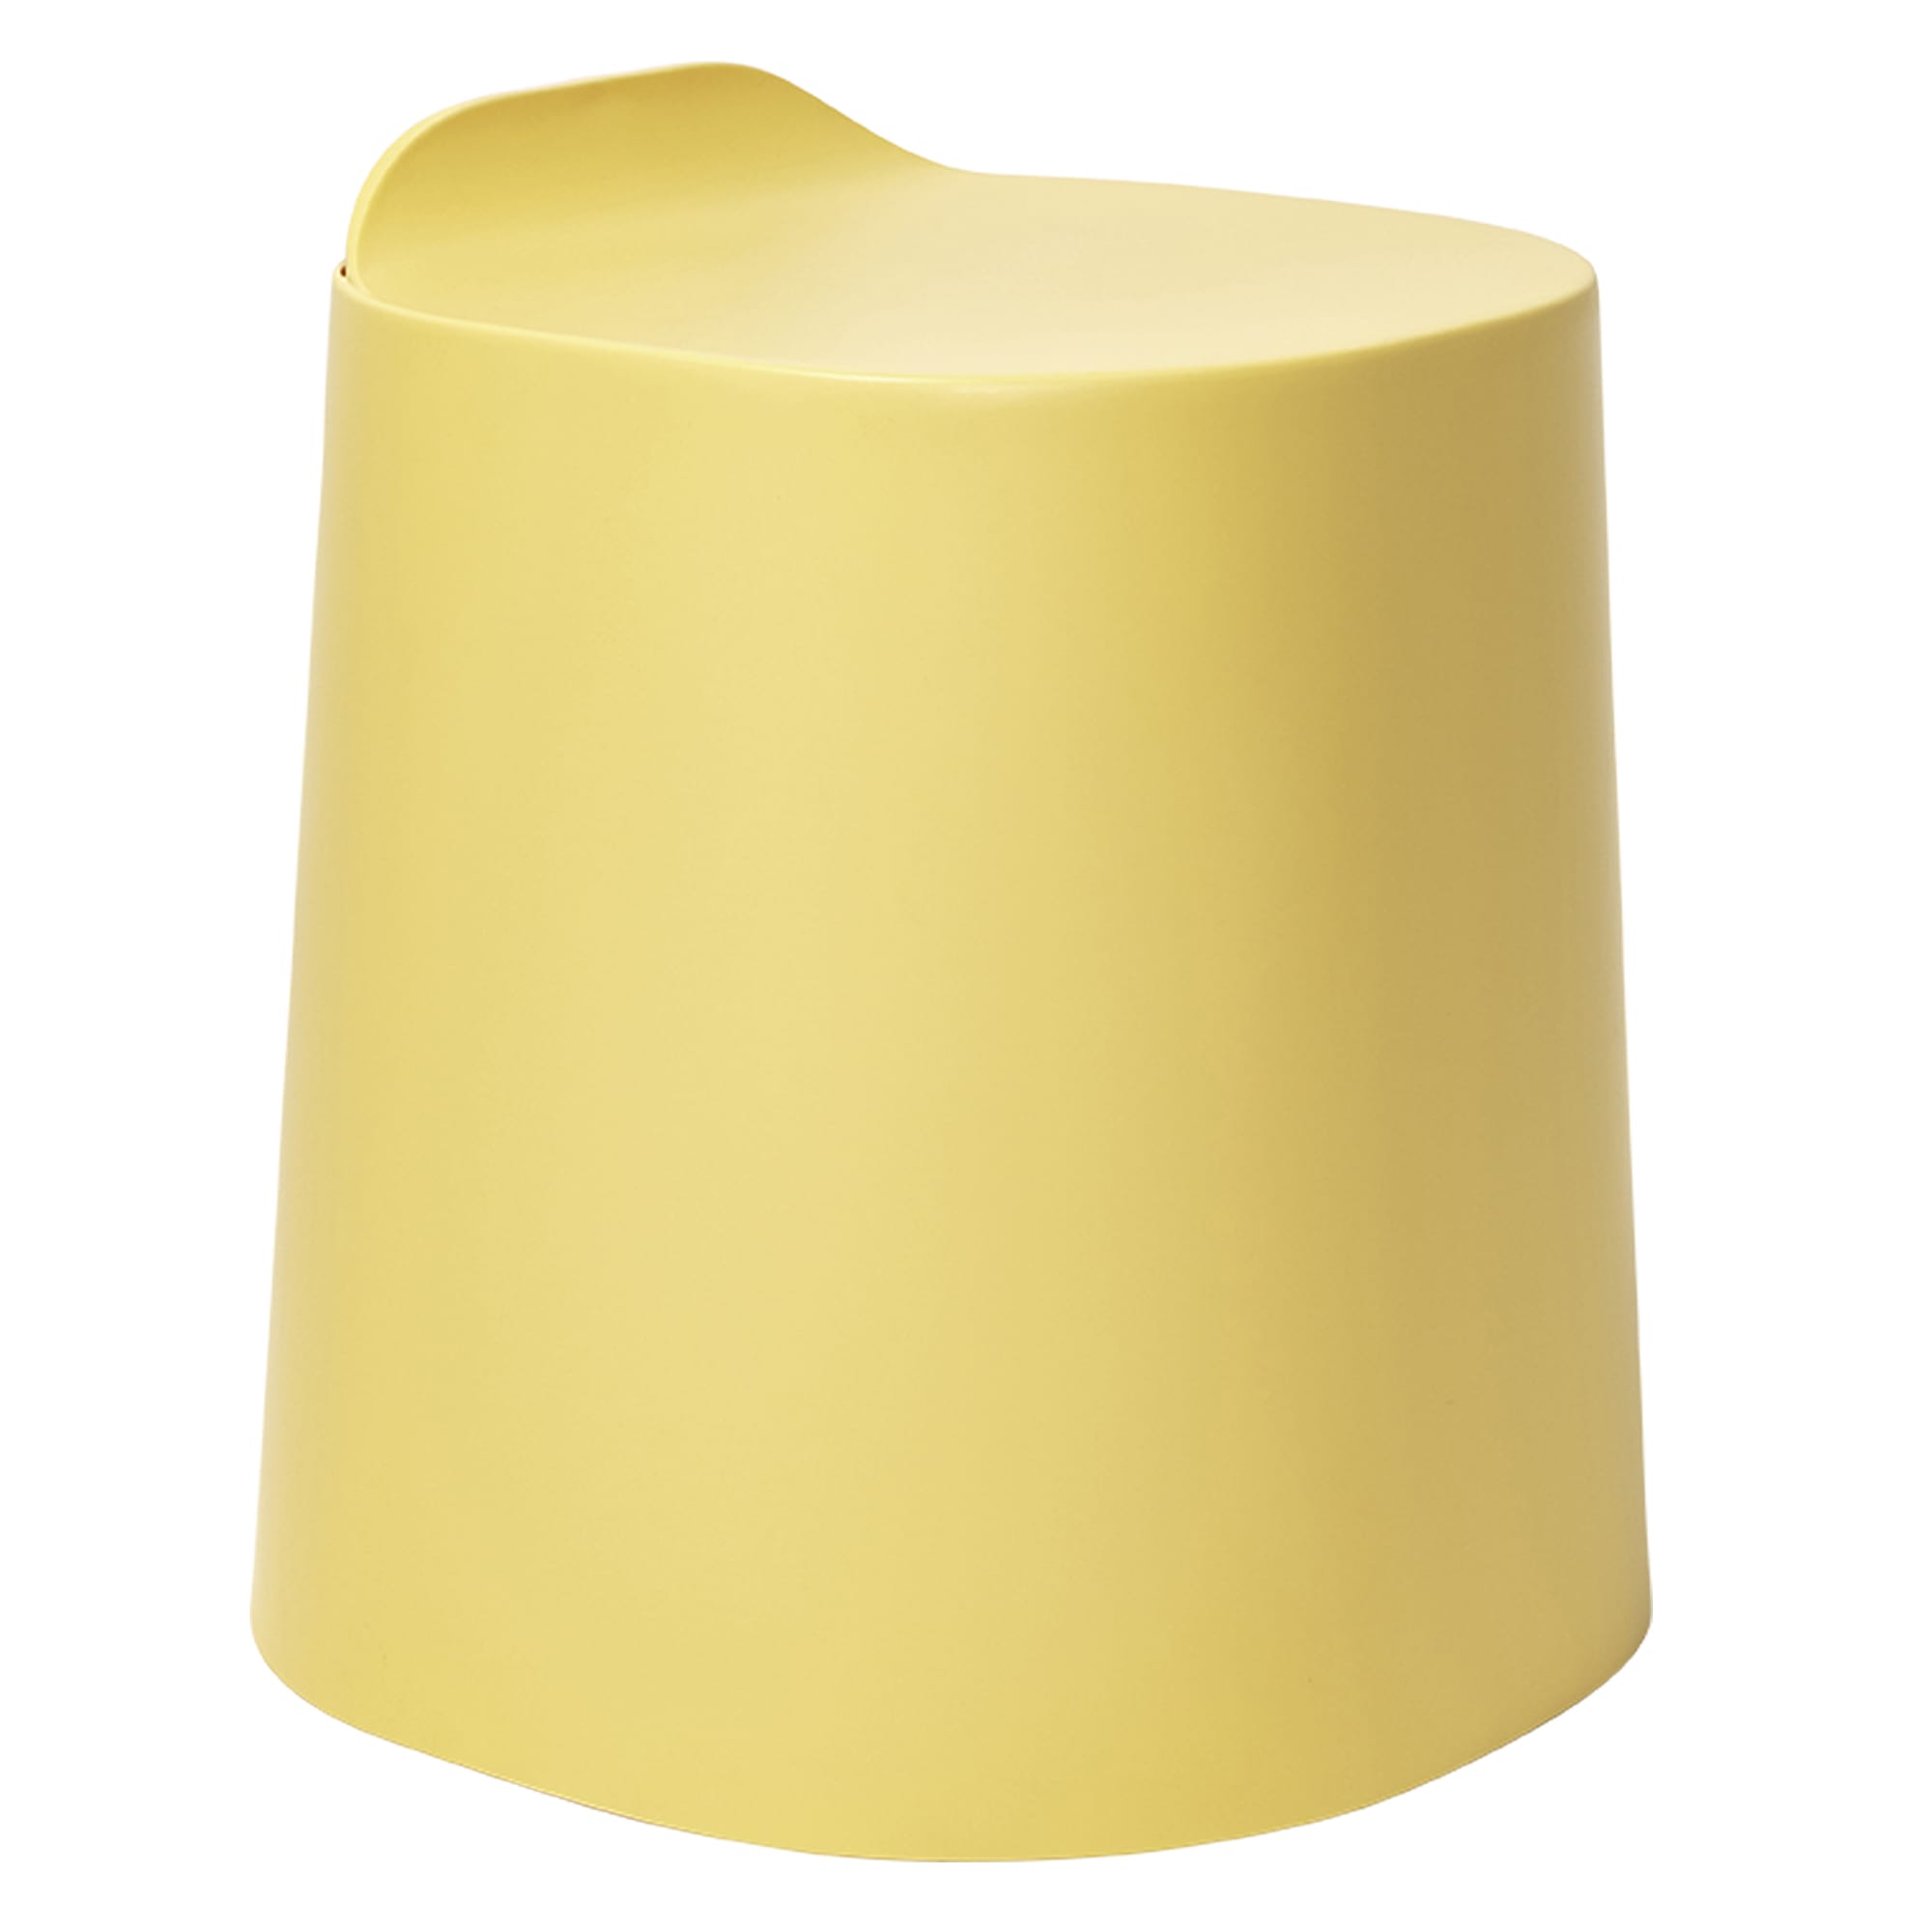 Buro Peekaboo stool Mustard side angle